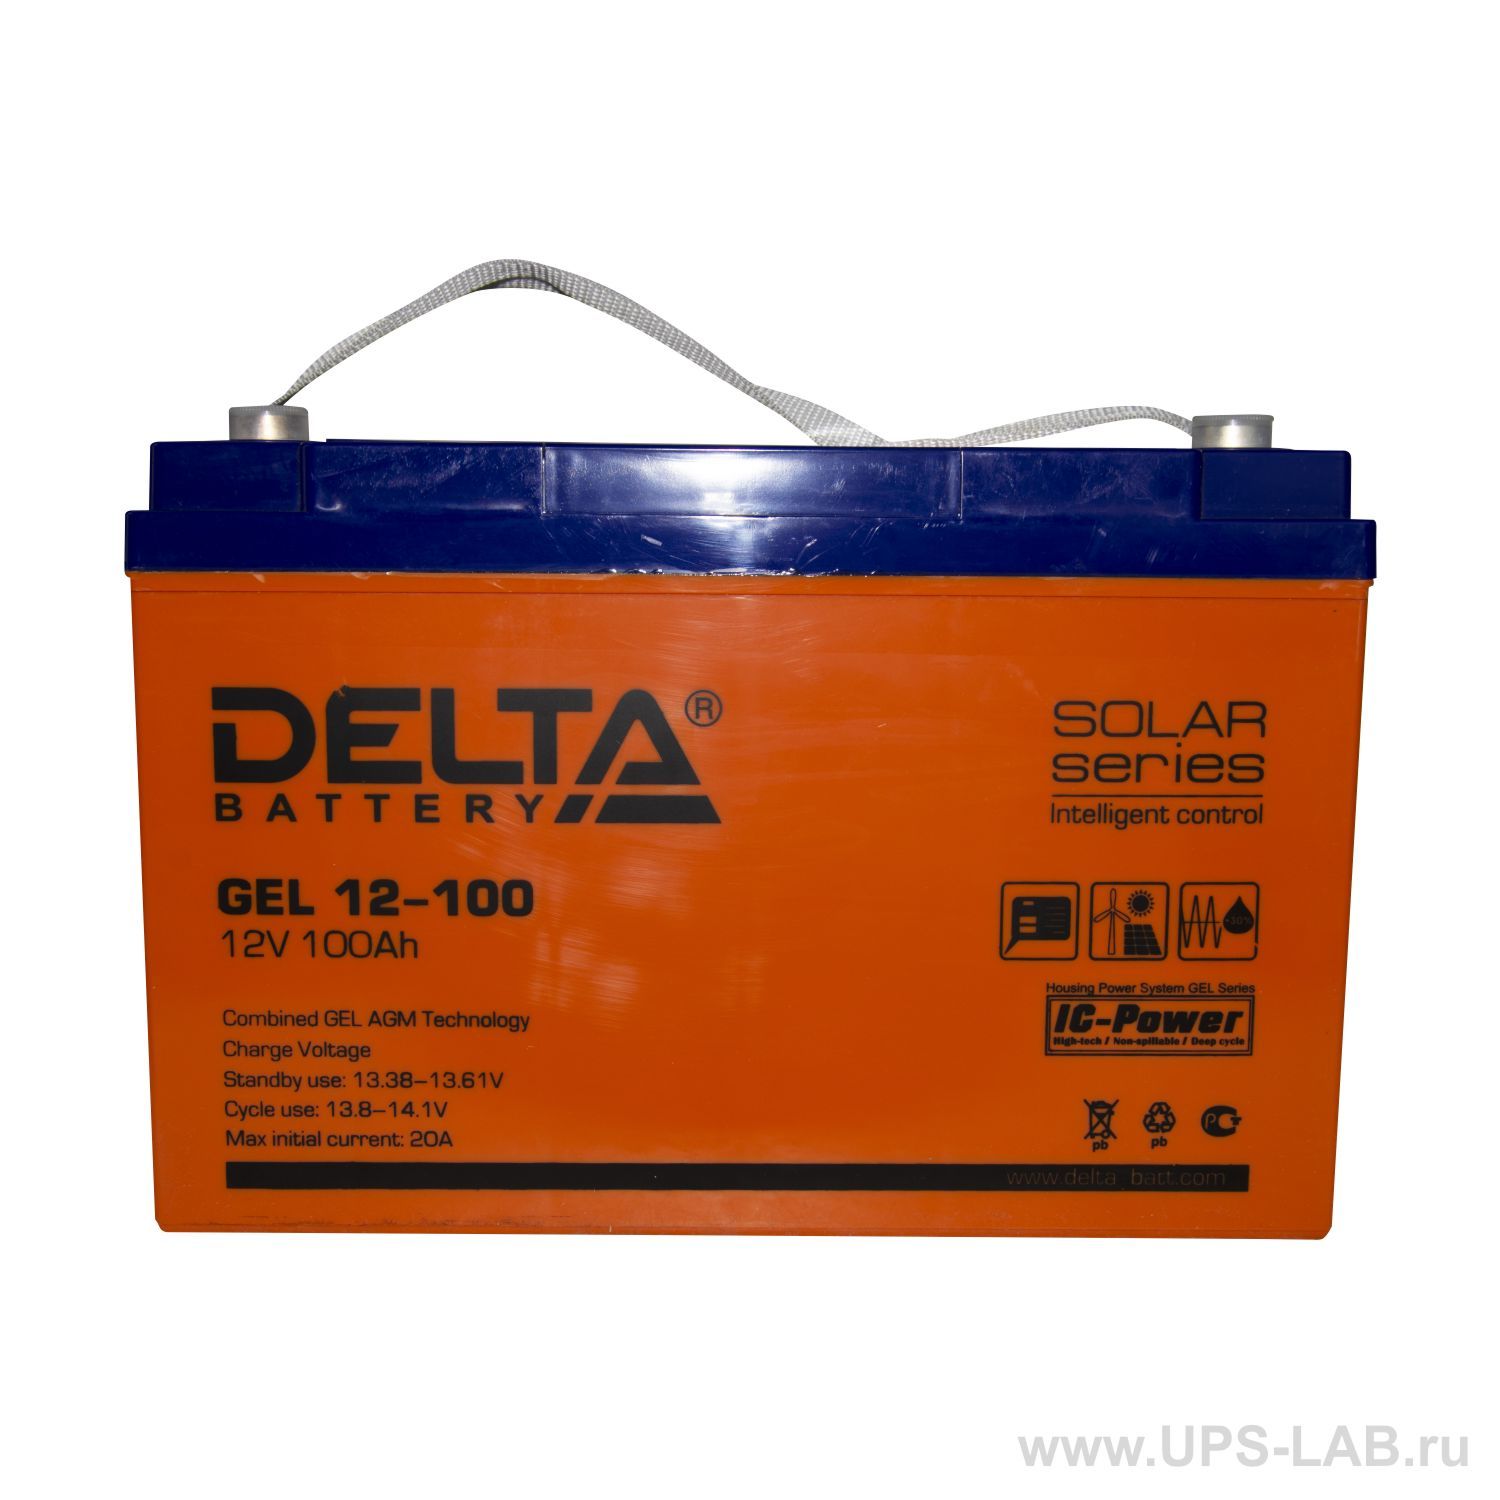 Аккумулятор gel 12в. Аккумулятор Delta Gel 12-100. Аккумулятор 100ач Delta. Аккумулятор Delta gel12100 12v 100ah (AGM+Gel, ups/Solar Series) (333*173*222mm). Delta Battery Gel 12-100 12в 100 а·ч.